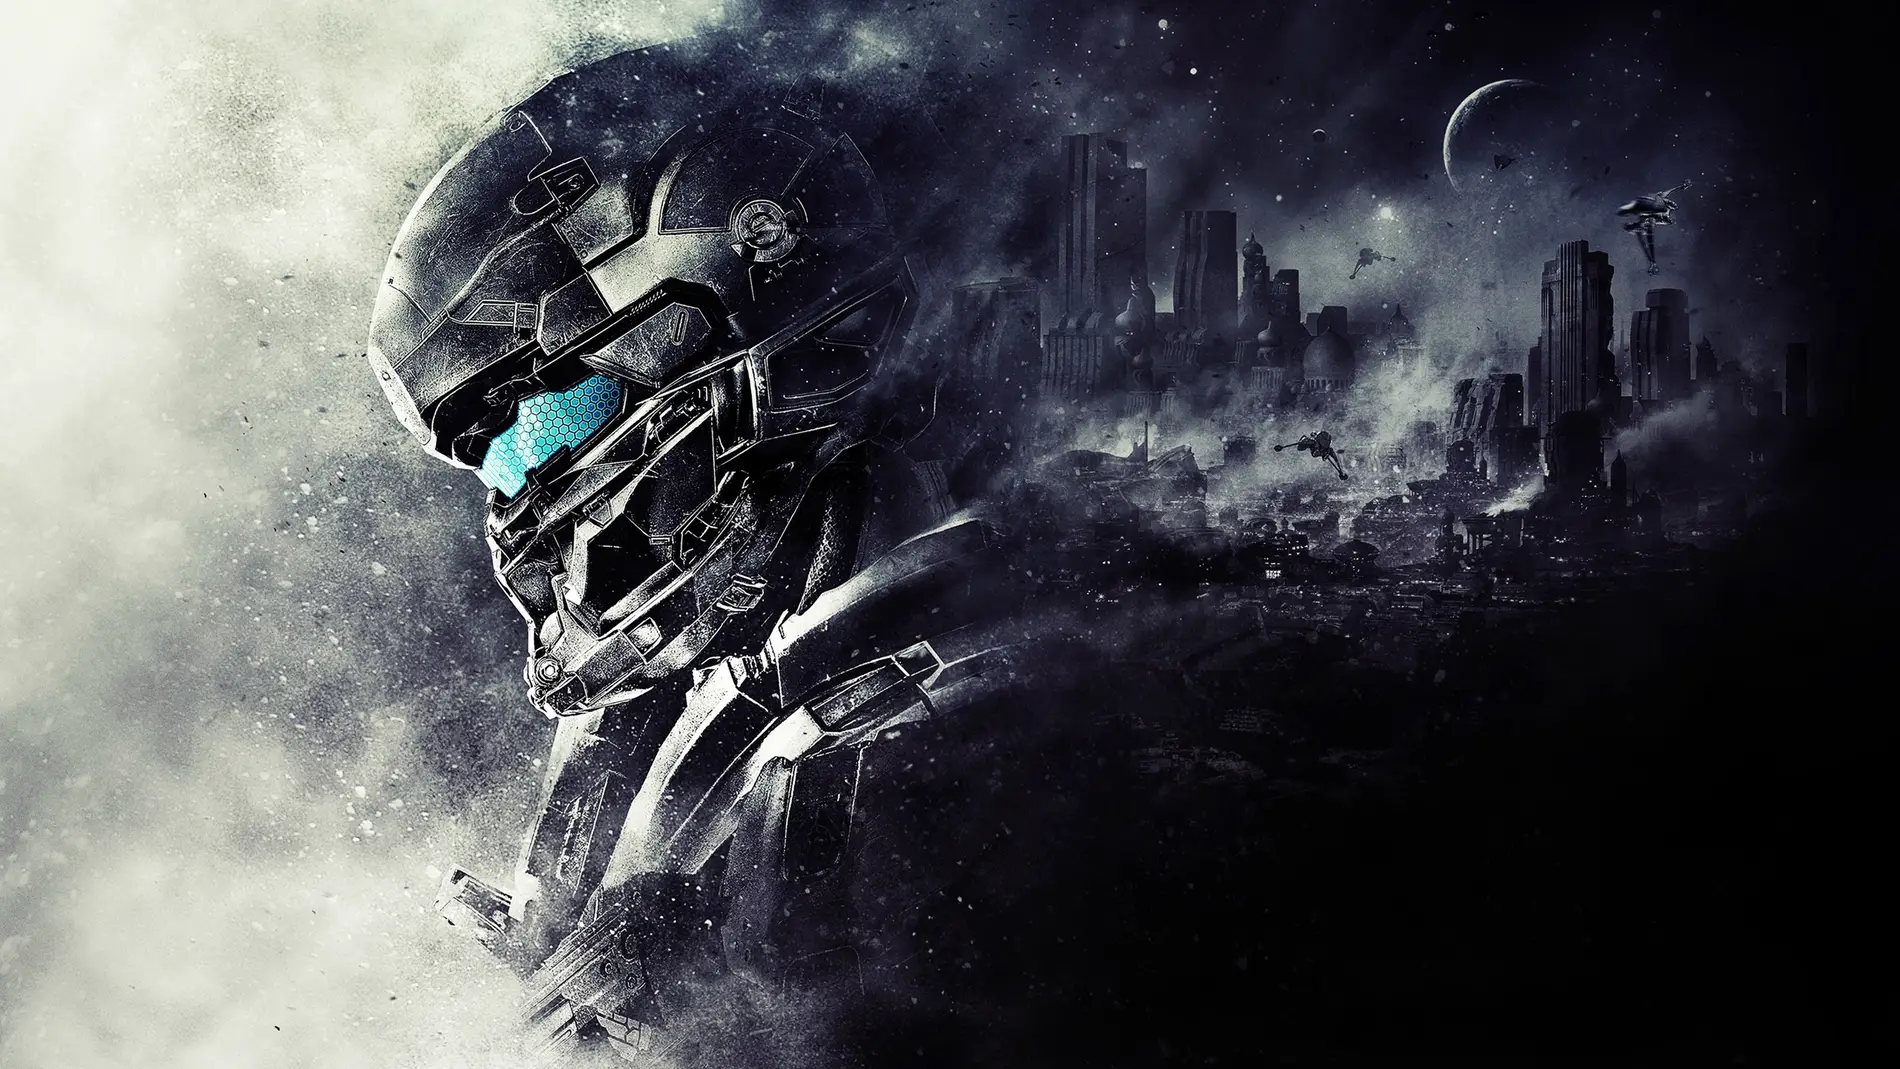 Halo 5 Guardians